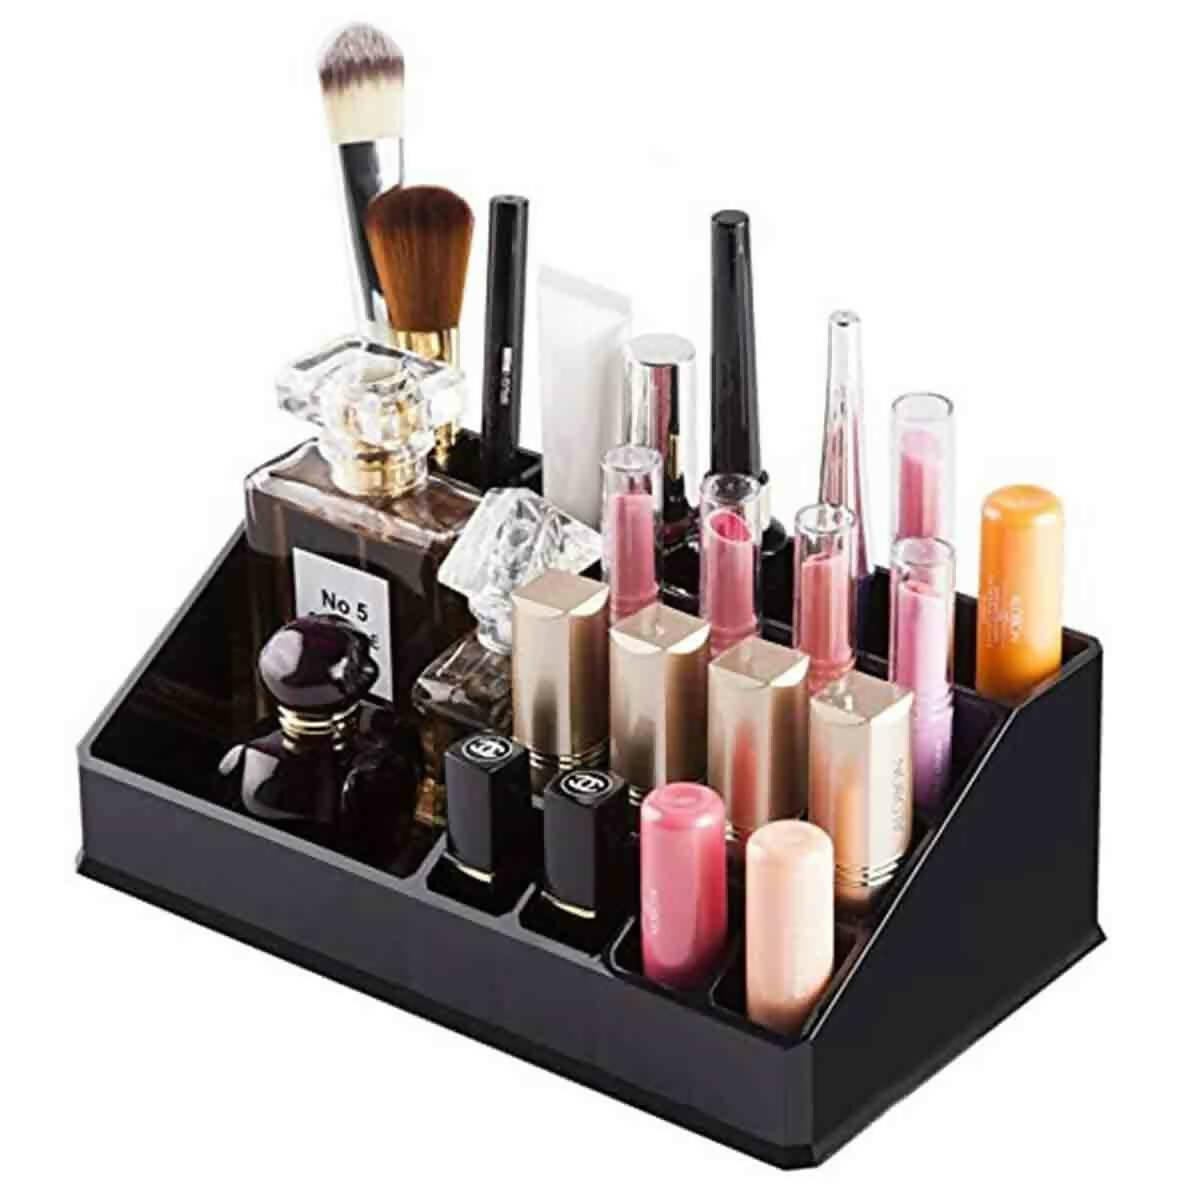 Premium Makeup Organizer - Stylish Storage Solution For Lipsticks, Cosmetic Brushes, Eyeliners, And Nail Polishes